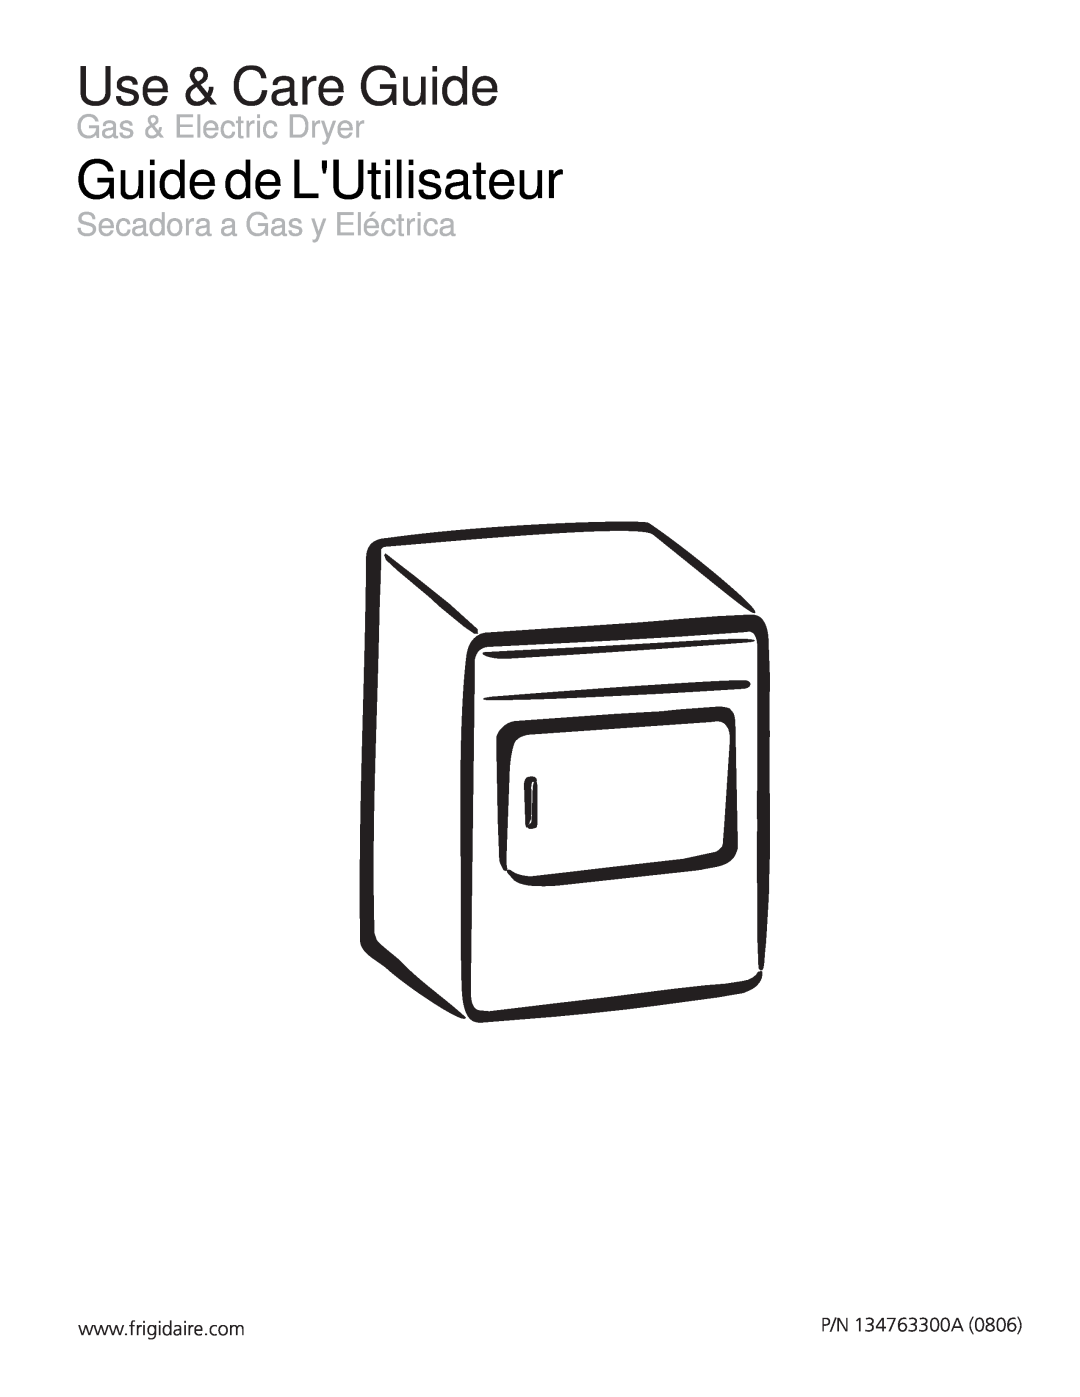 Frigidaire 134763300A manual Use & Care Guide, Guide de LUtilisateur, Gas & Electric Dryer, Secadora a Gas y Eléctrica 